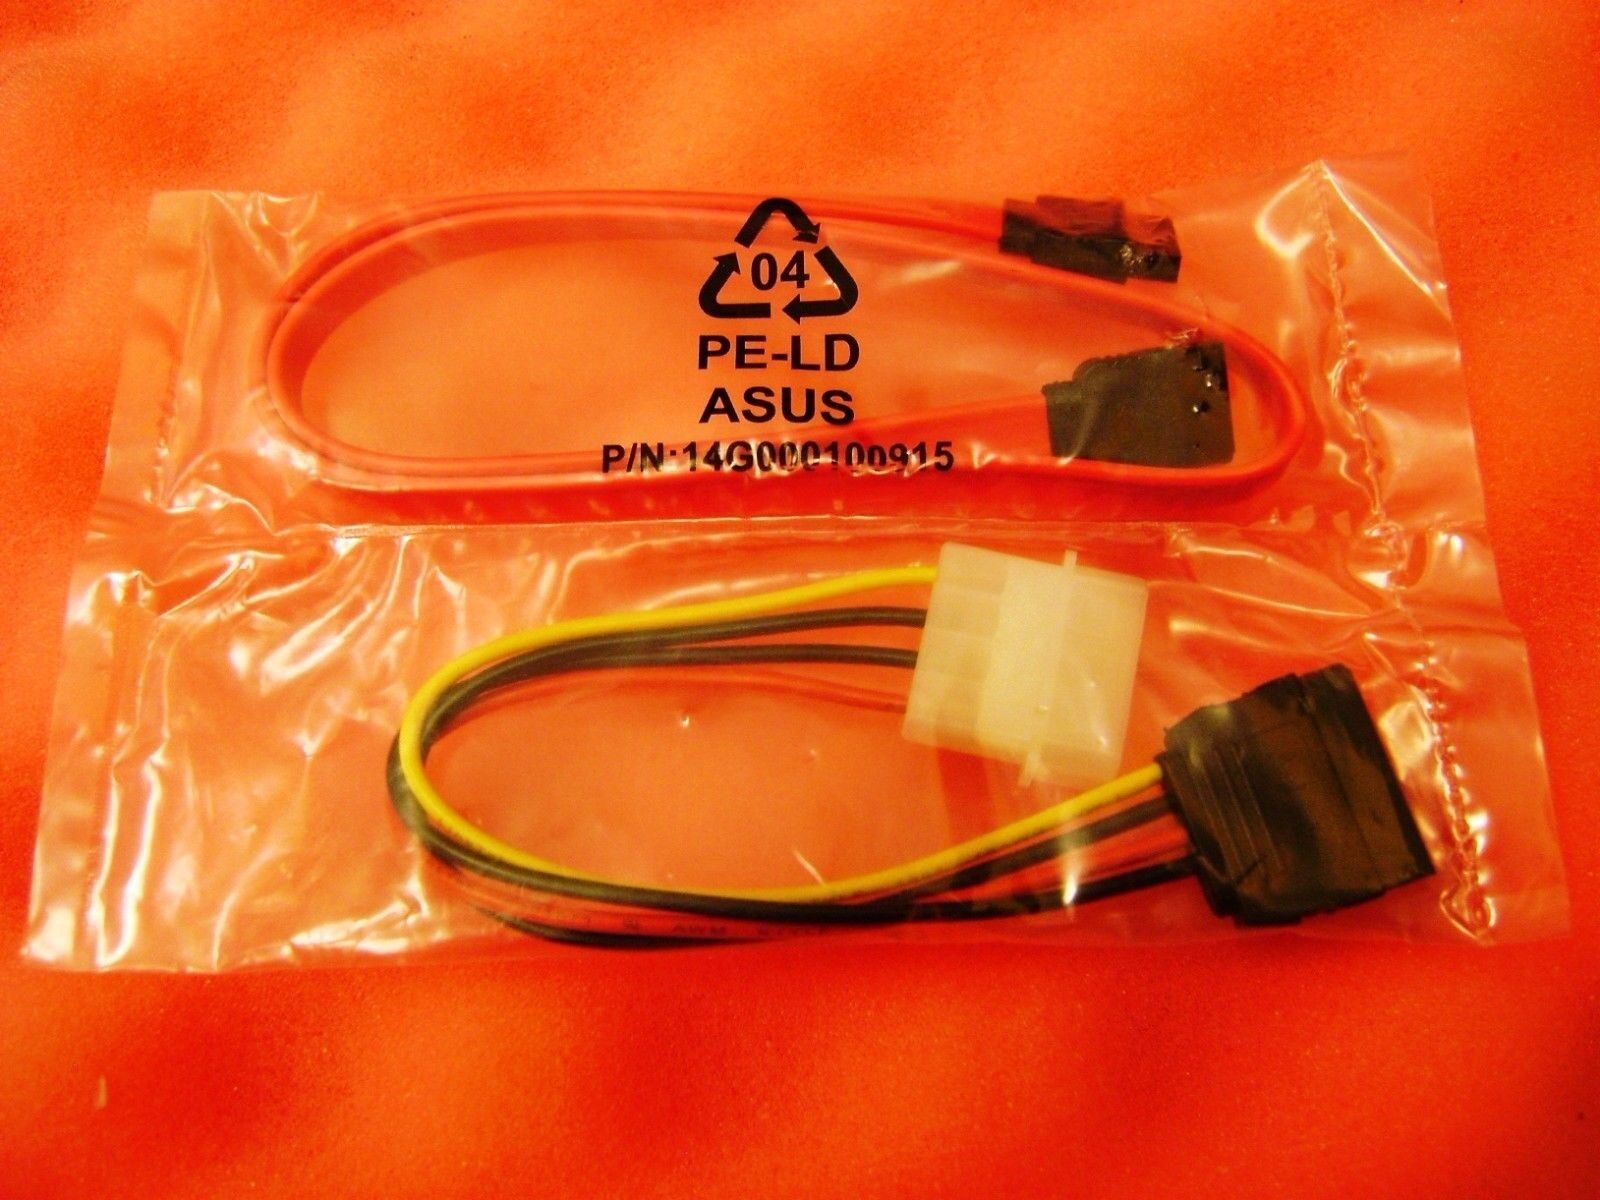 14G000100915 * Asus M2A-VM Motherboard SATA & Power Cable Kit